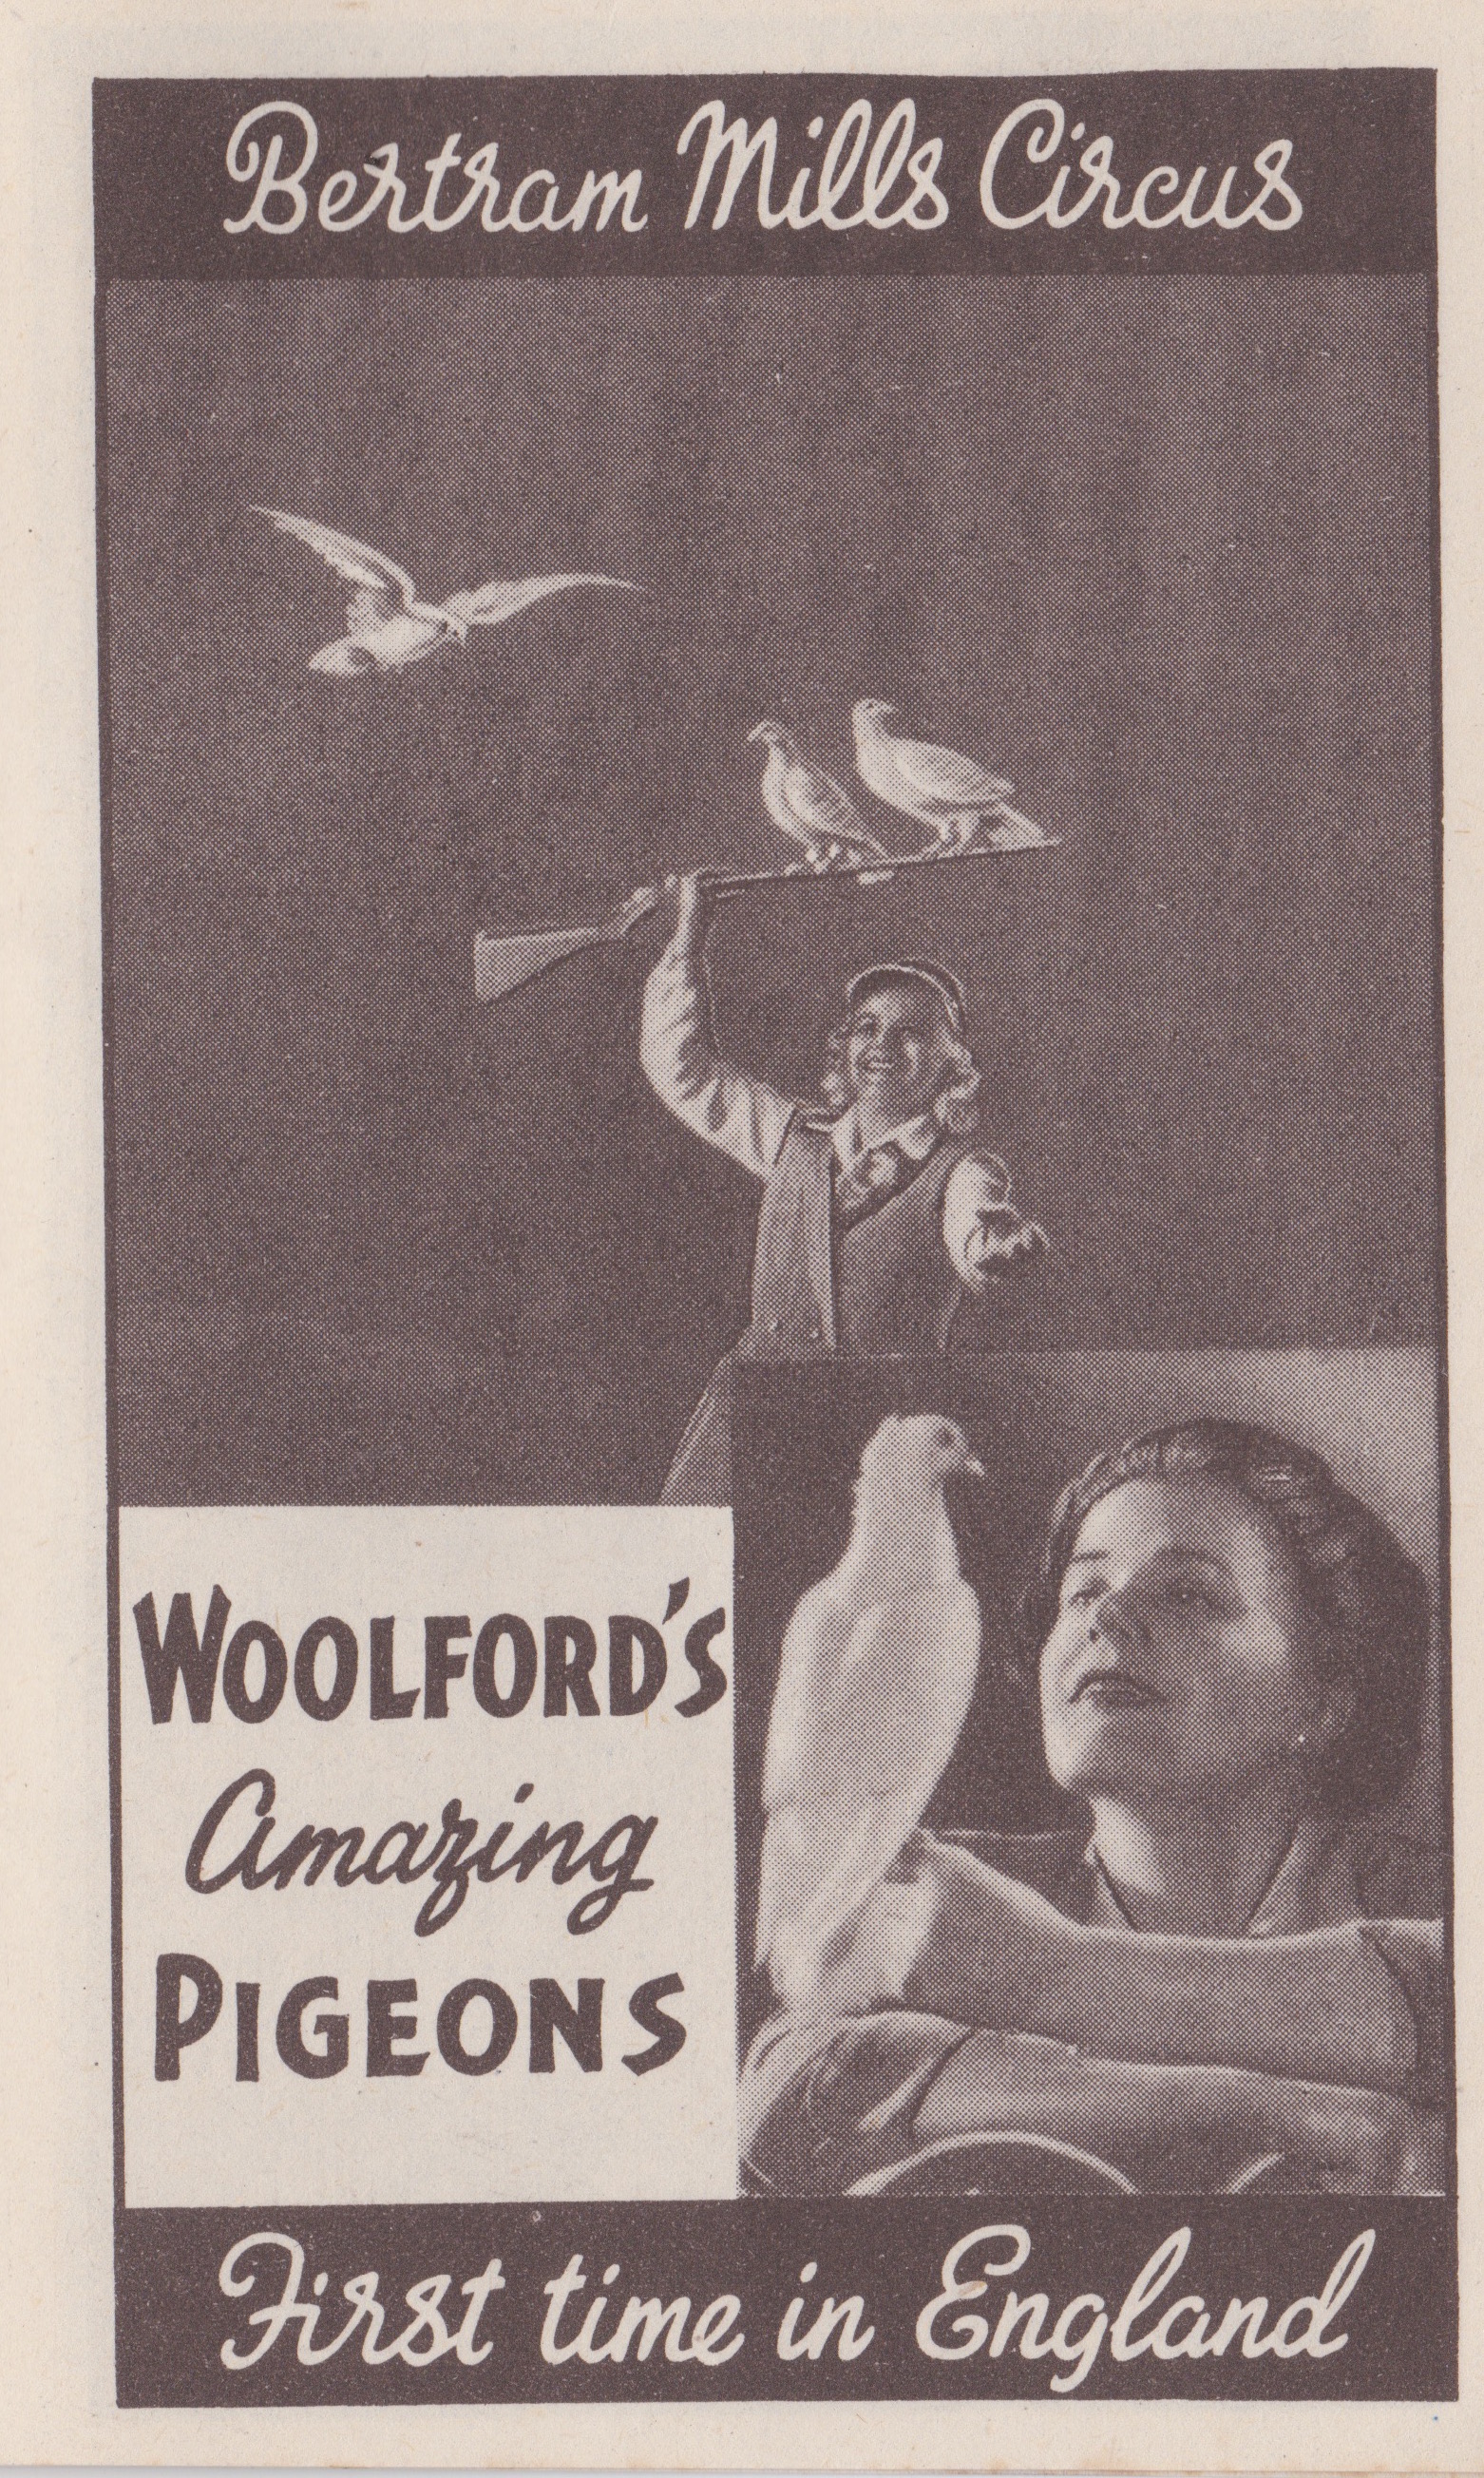 Bertram Mills Circus Dec 17 1948 Woolford's Amazing Pigeons